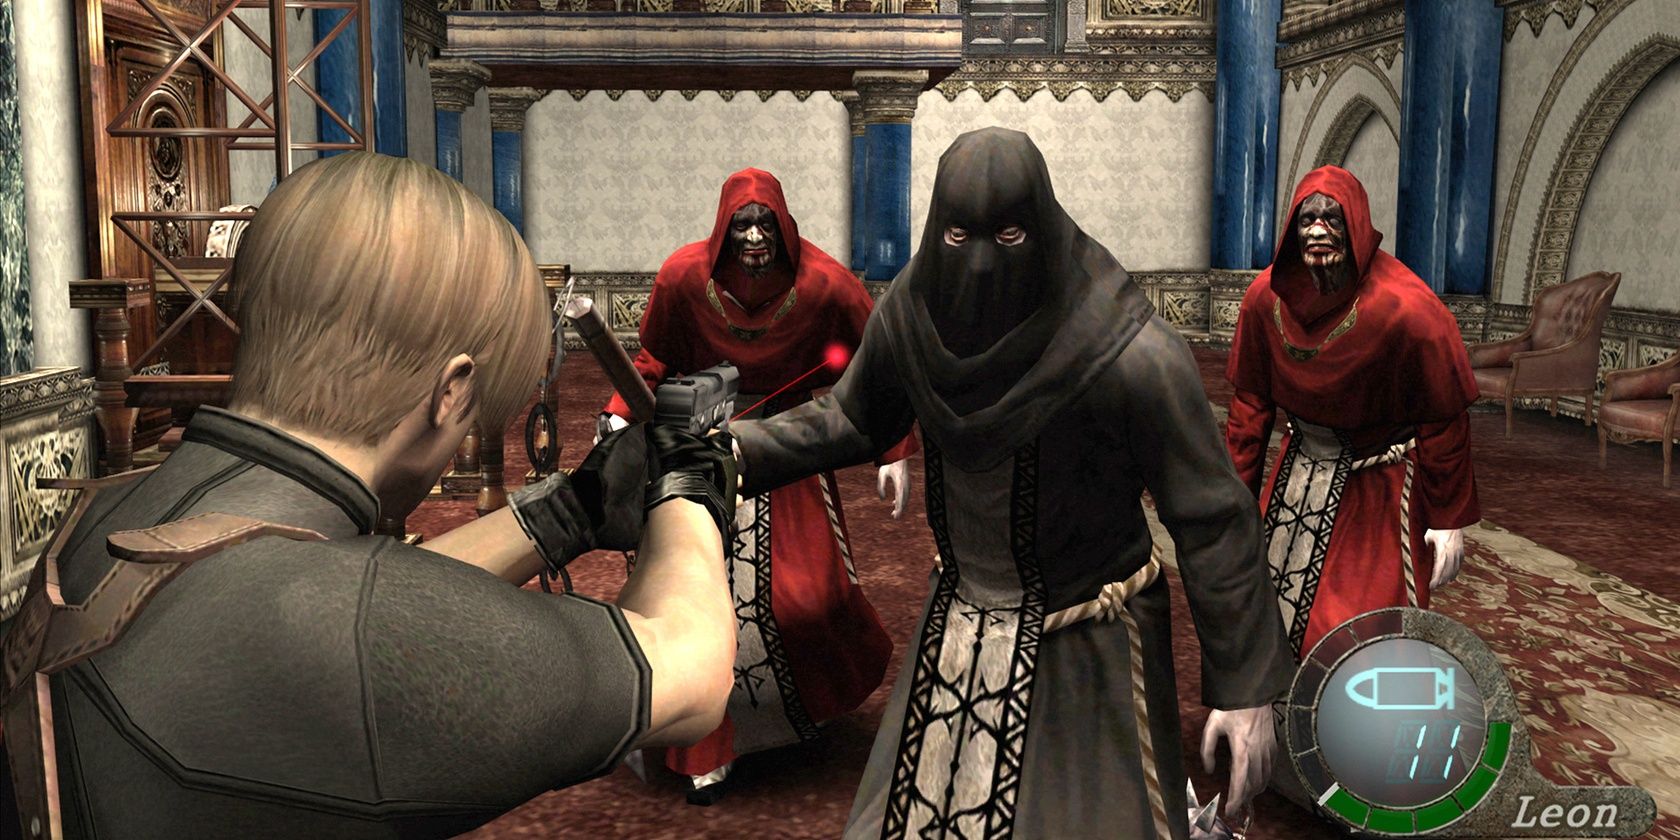 Leon Kennedy attacking Los Illuminados acolytes in Resident Evil 4